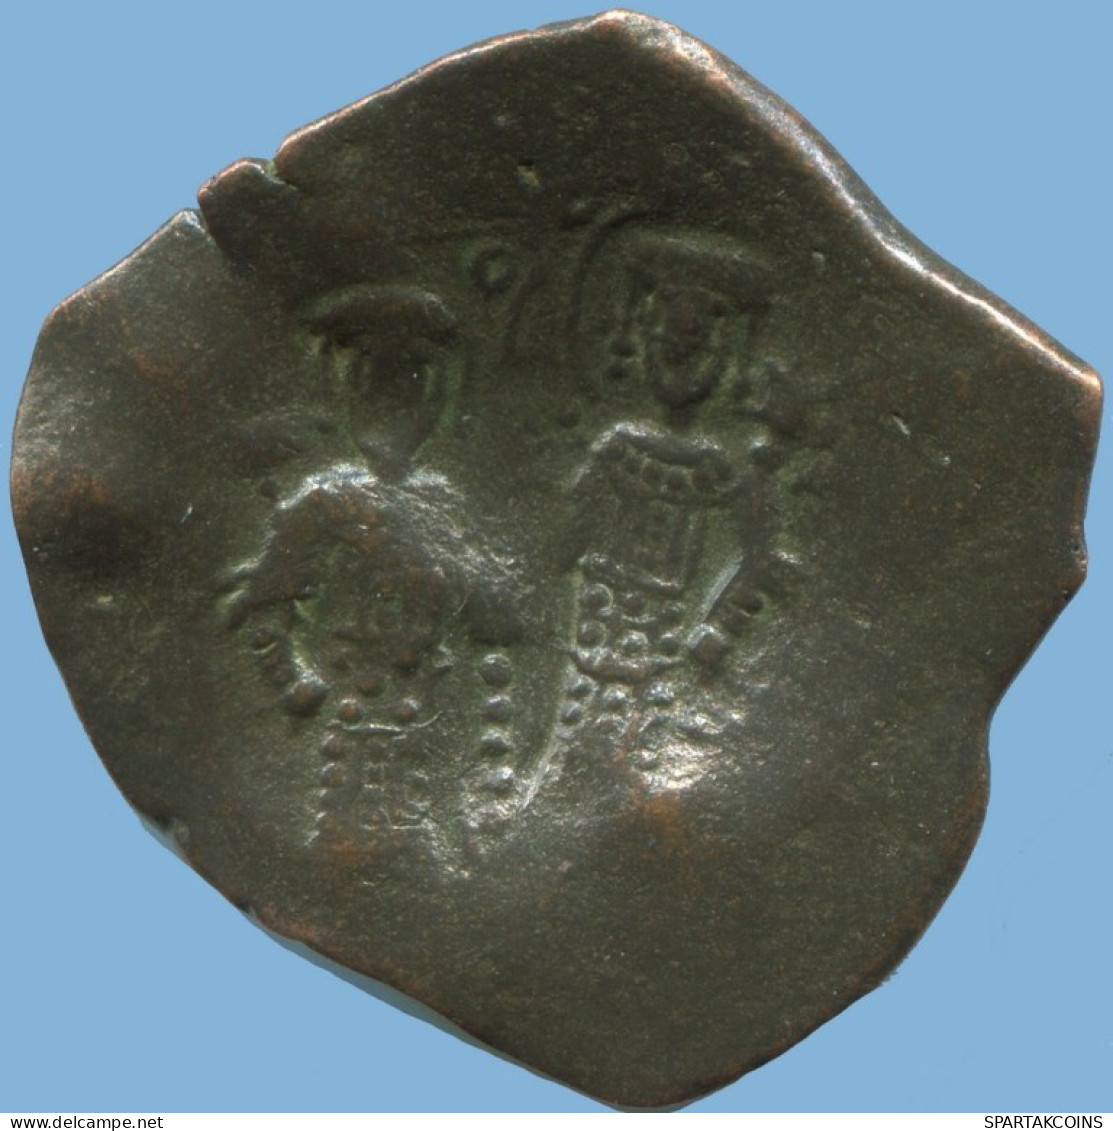 ALEXIOS III ANGELOS ASPRON TRACHY BILLON BYZANTINE Moneda 2.8g/26mm #AB451.9.E.A - Bizantine